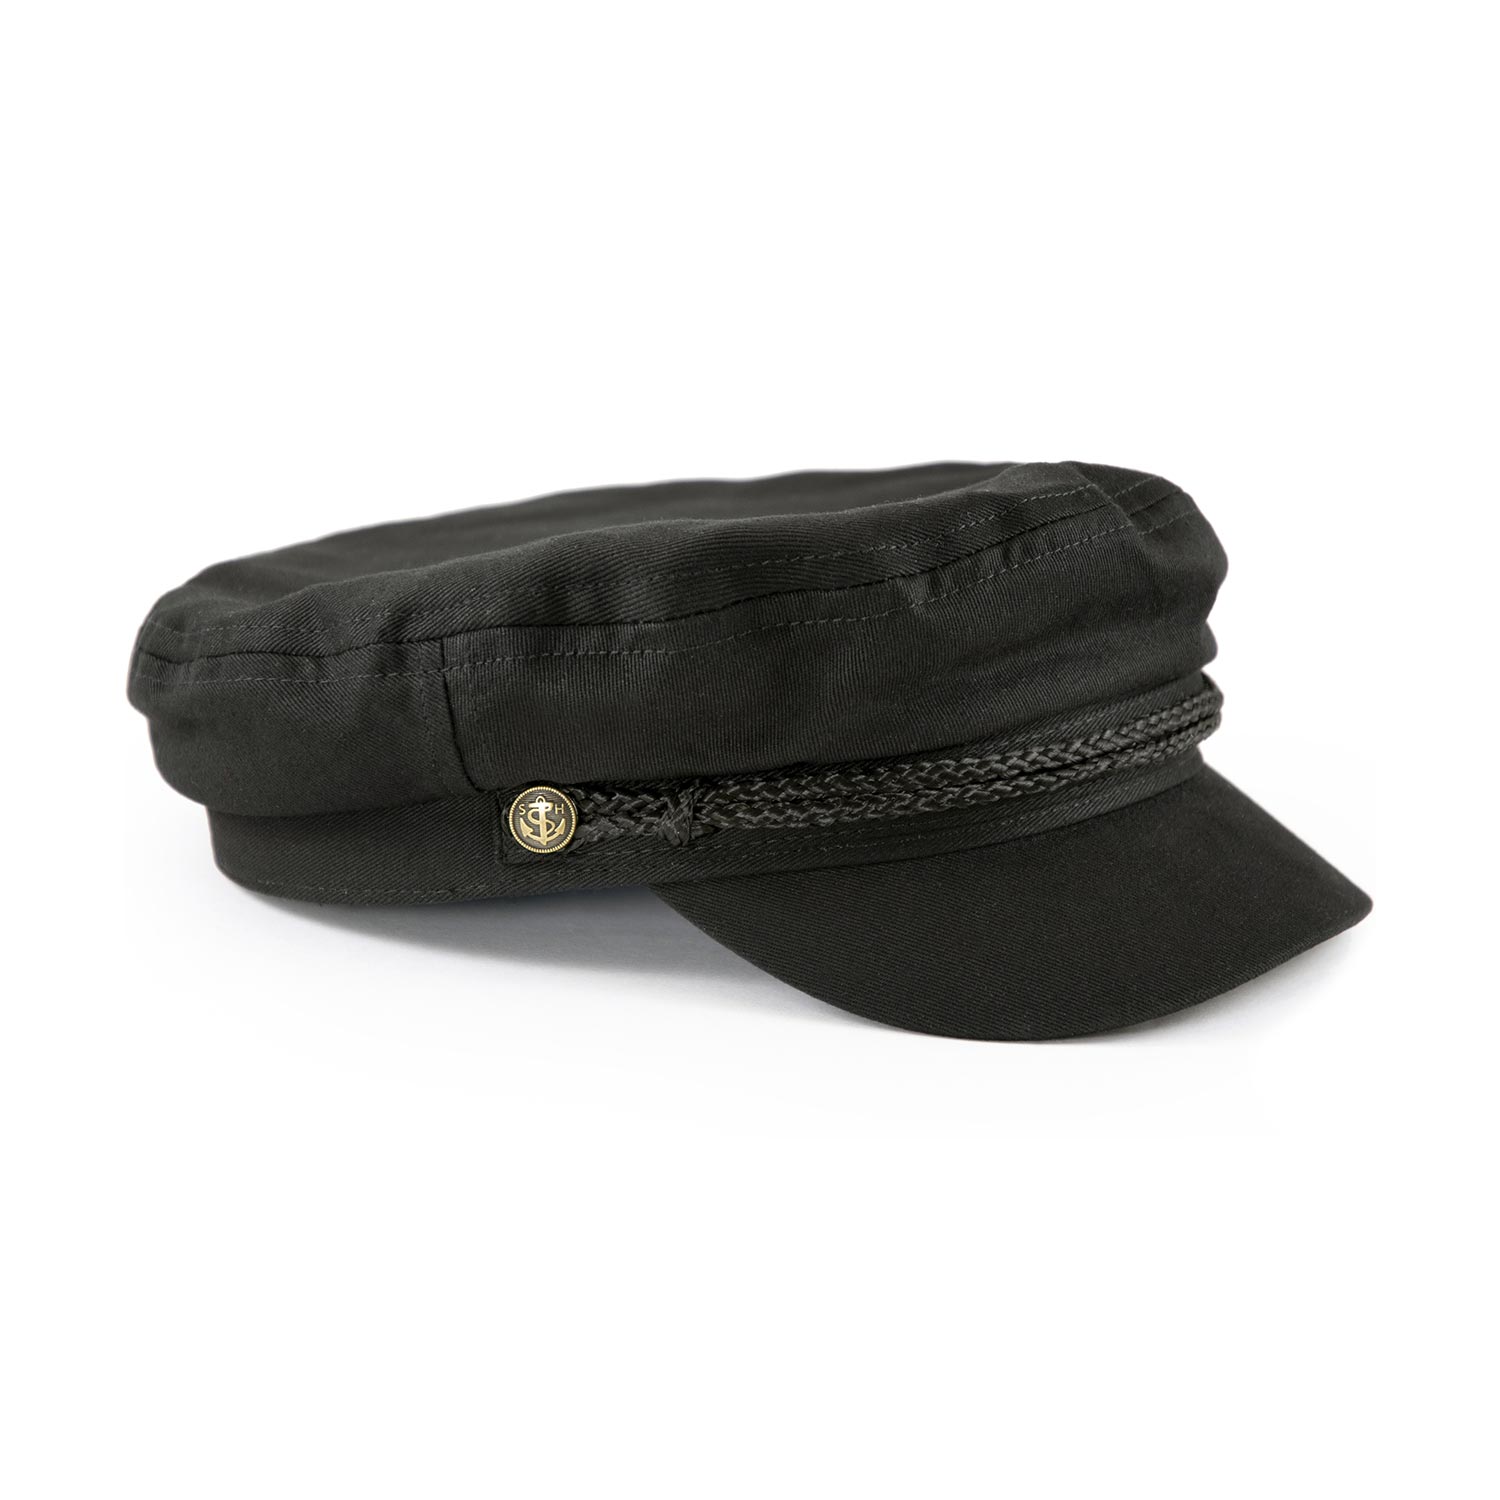 black peaked cap